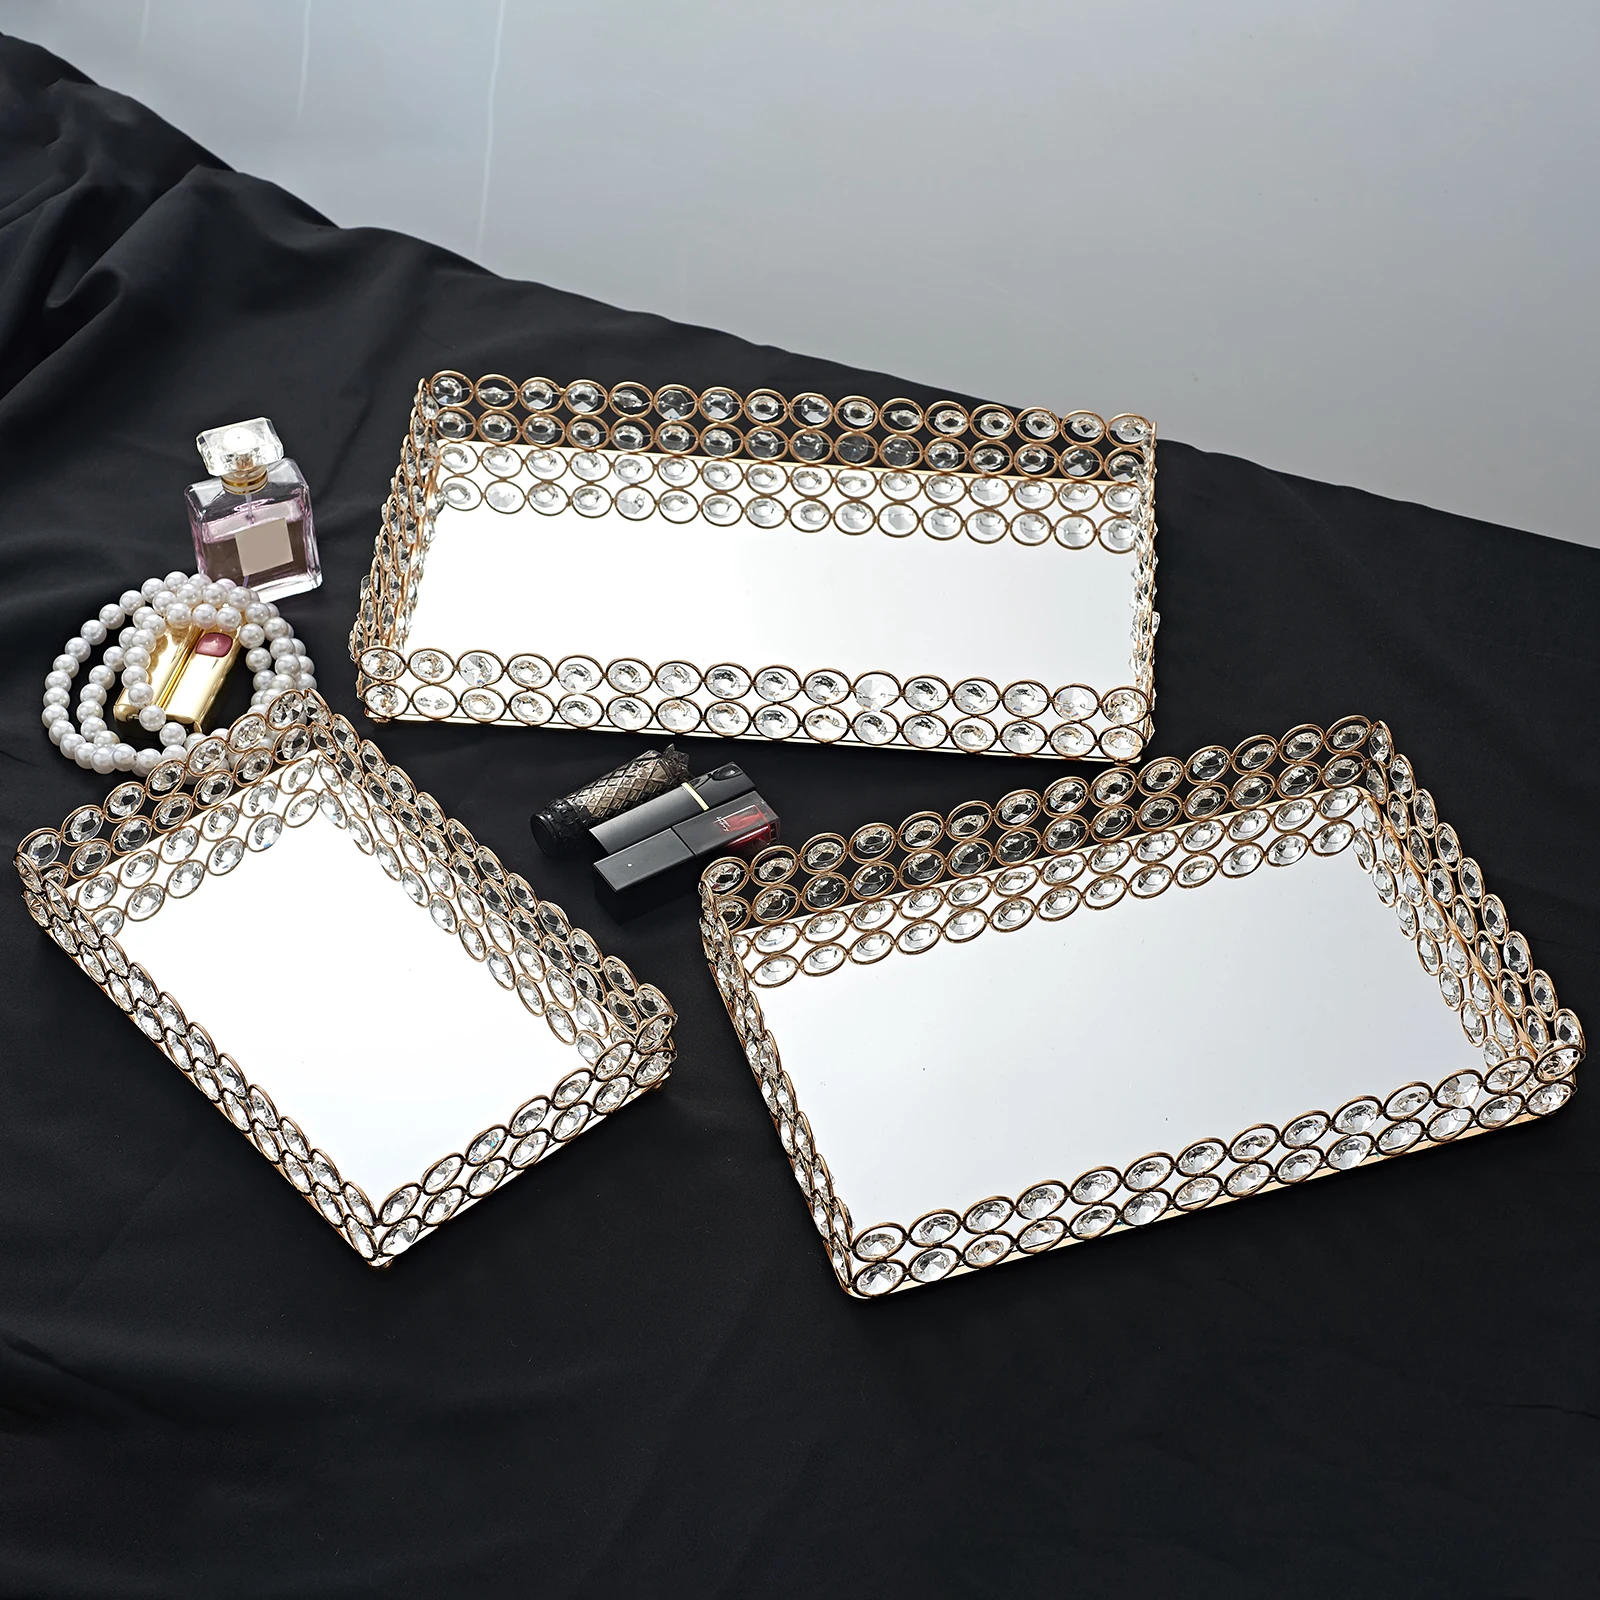 Gold Perfume Mirror Vanity Tray Dresser Ornate Tray Home Wedding Decorative Mirrored Tray Jewelry Perfume Makeup Organizer